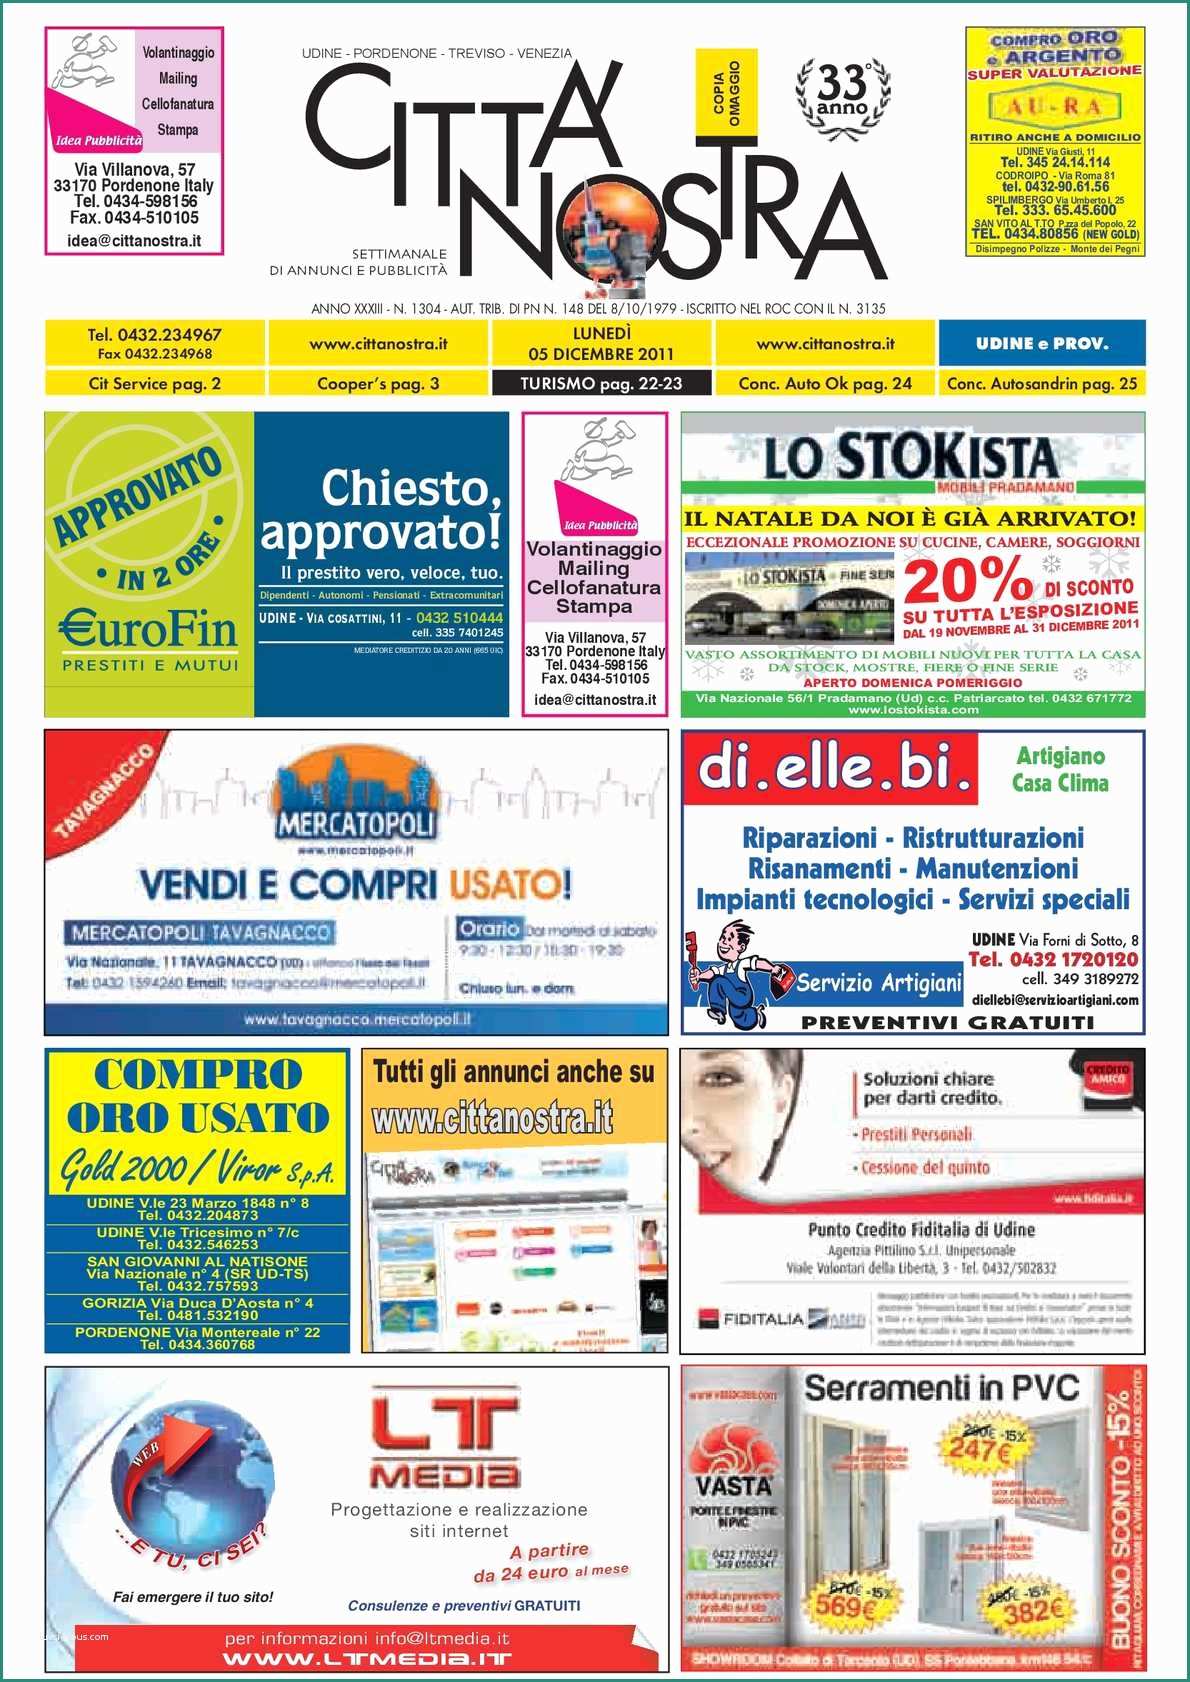 Divano Posti E Calaméo Citt  Nostra Udine Del 05 12 2011 N 1305